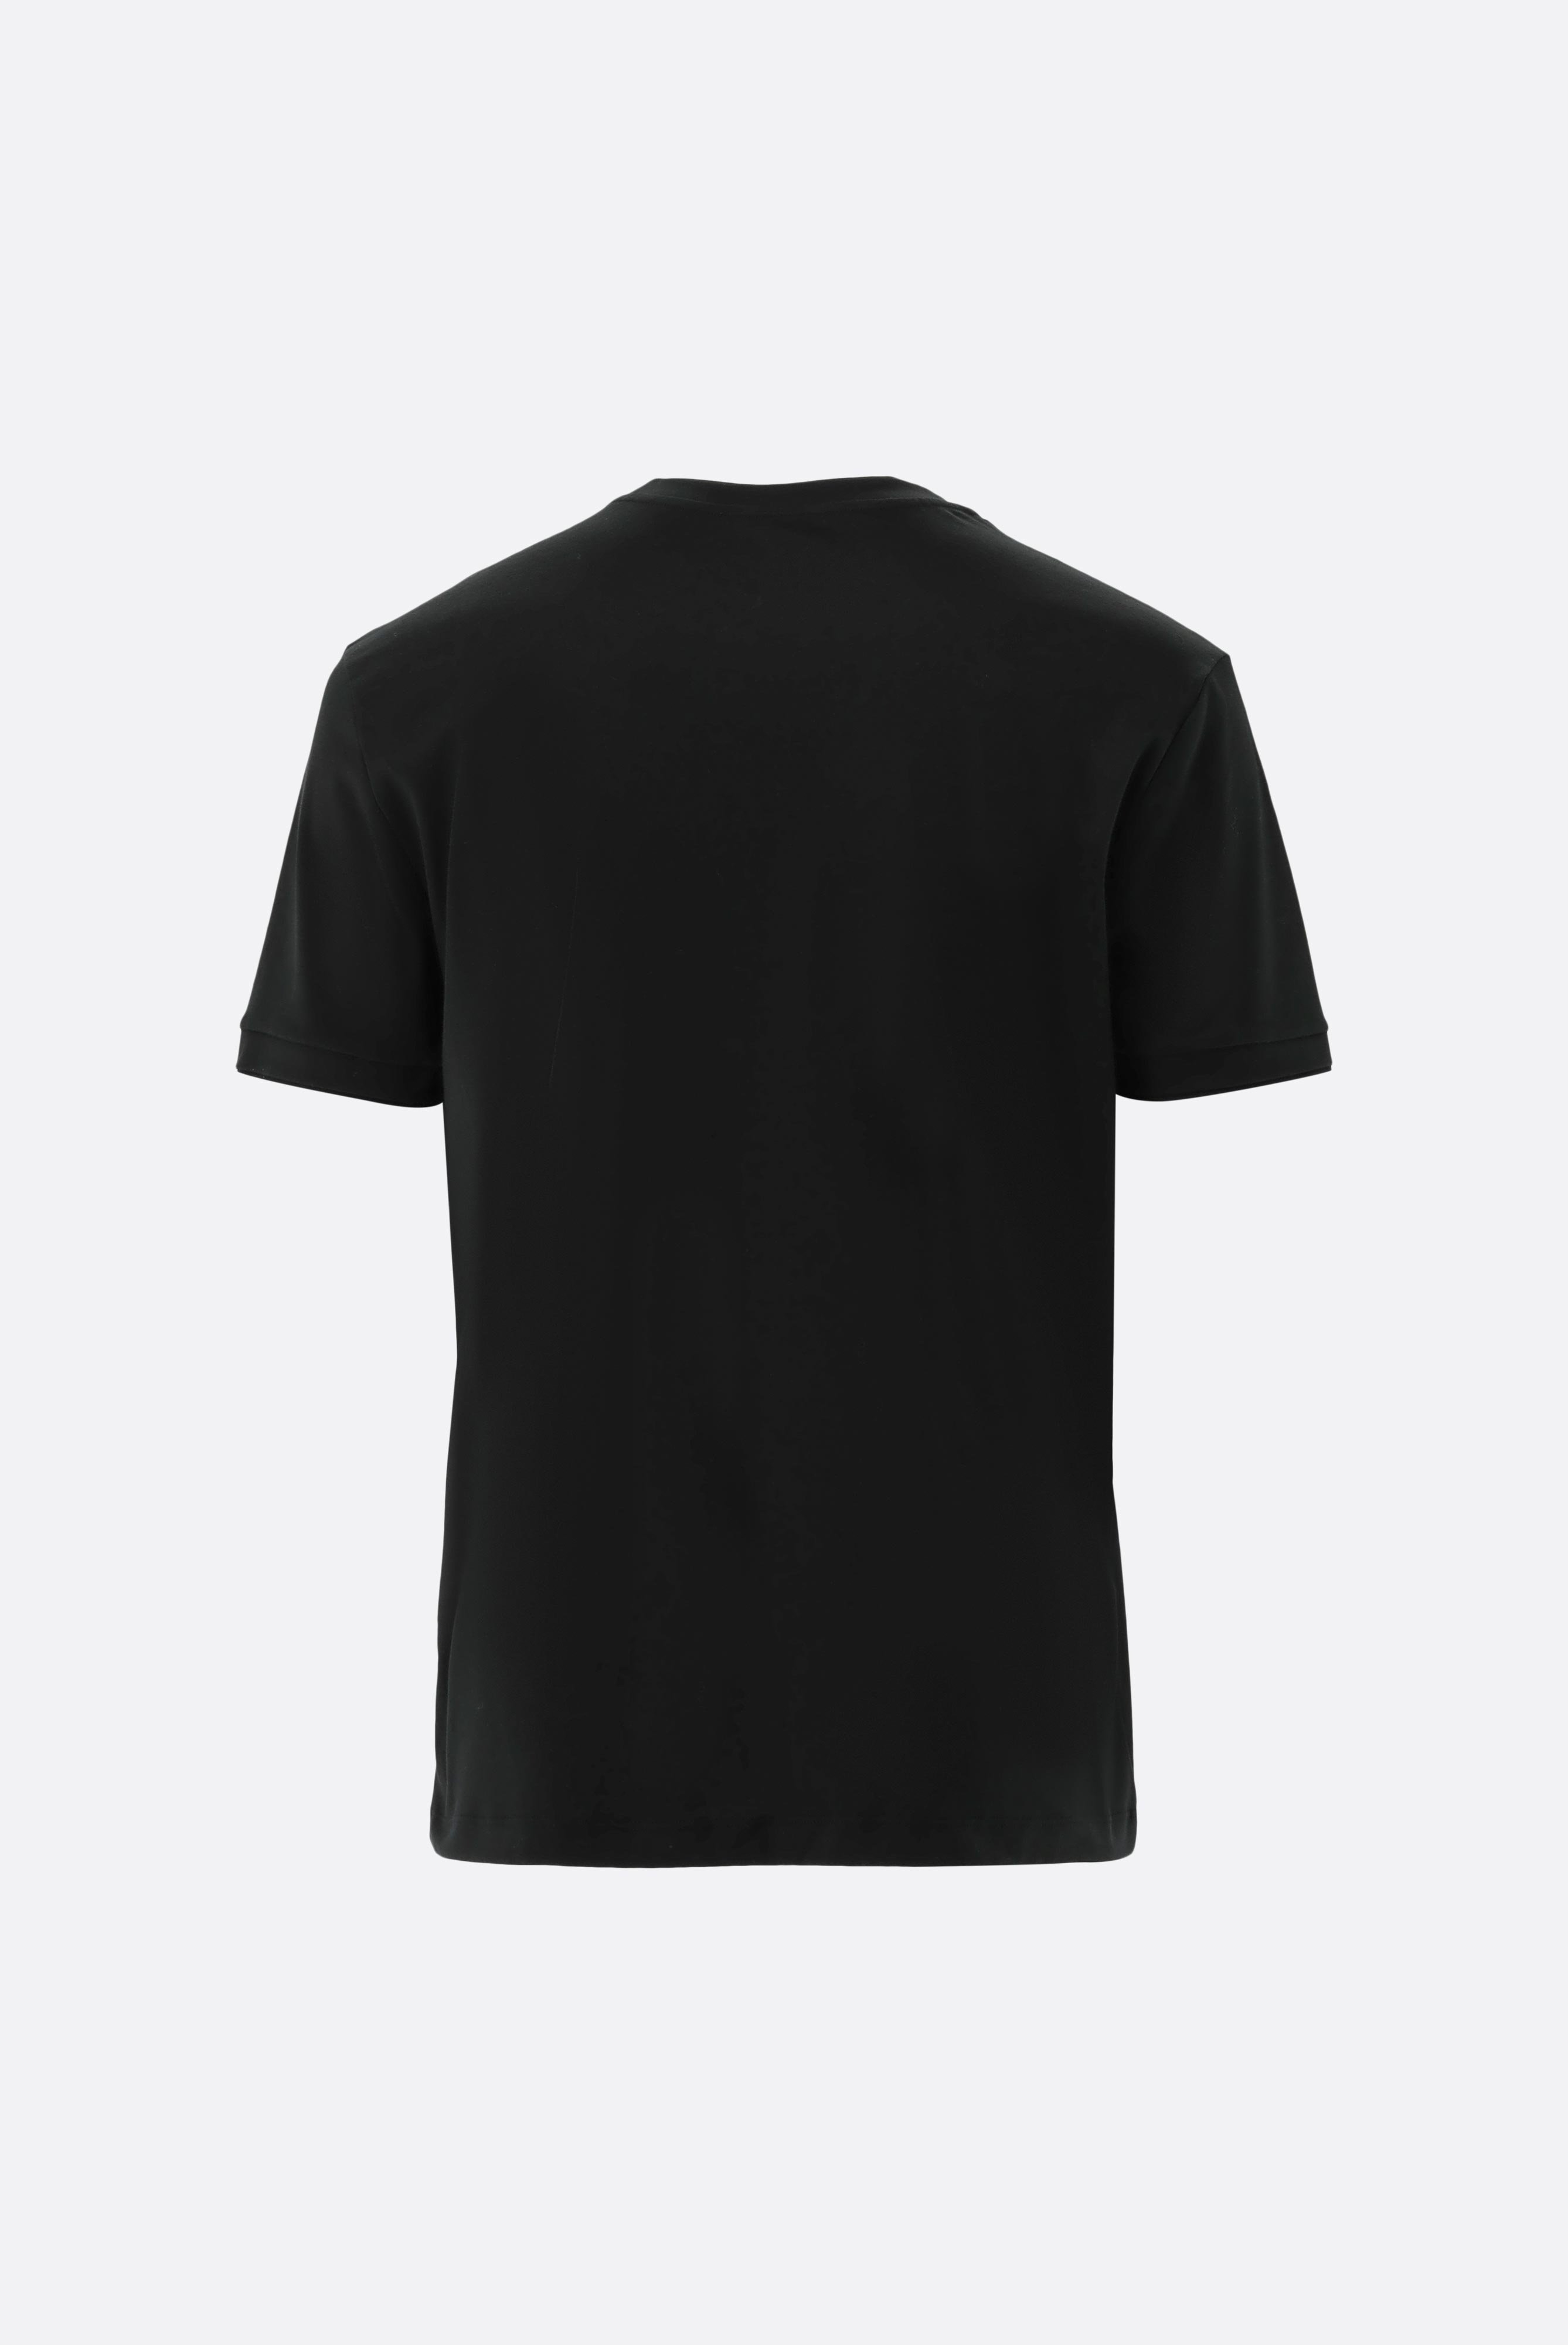 T-Shirts+T-shirt with piping details+20.1673.U2.180053.099.XS